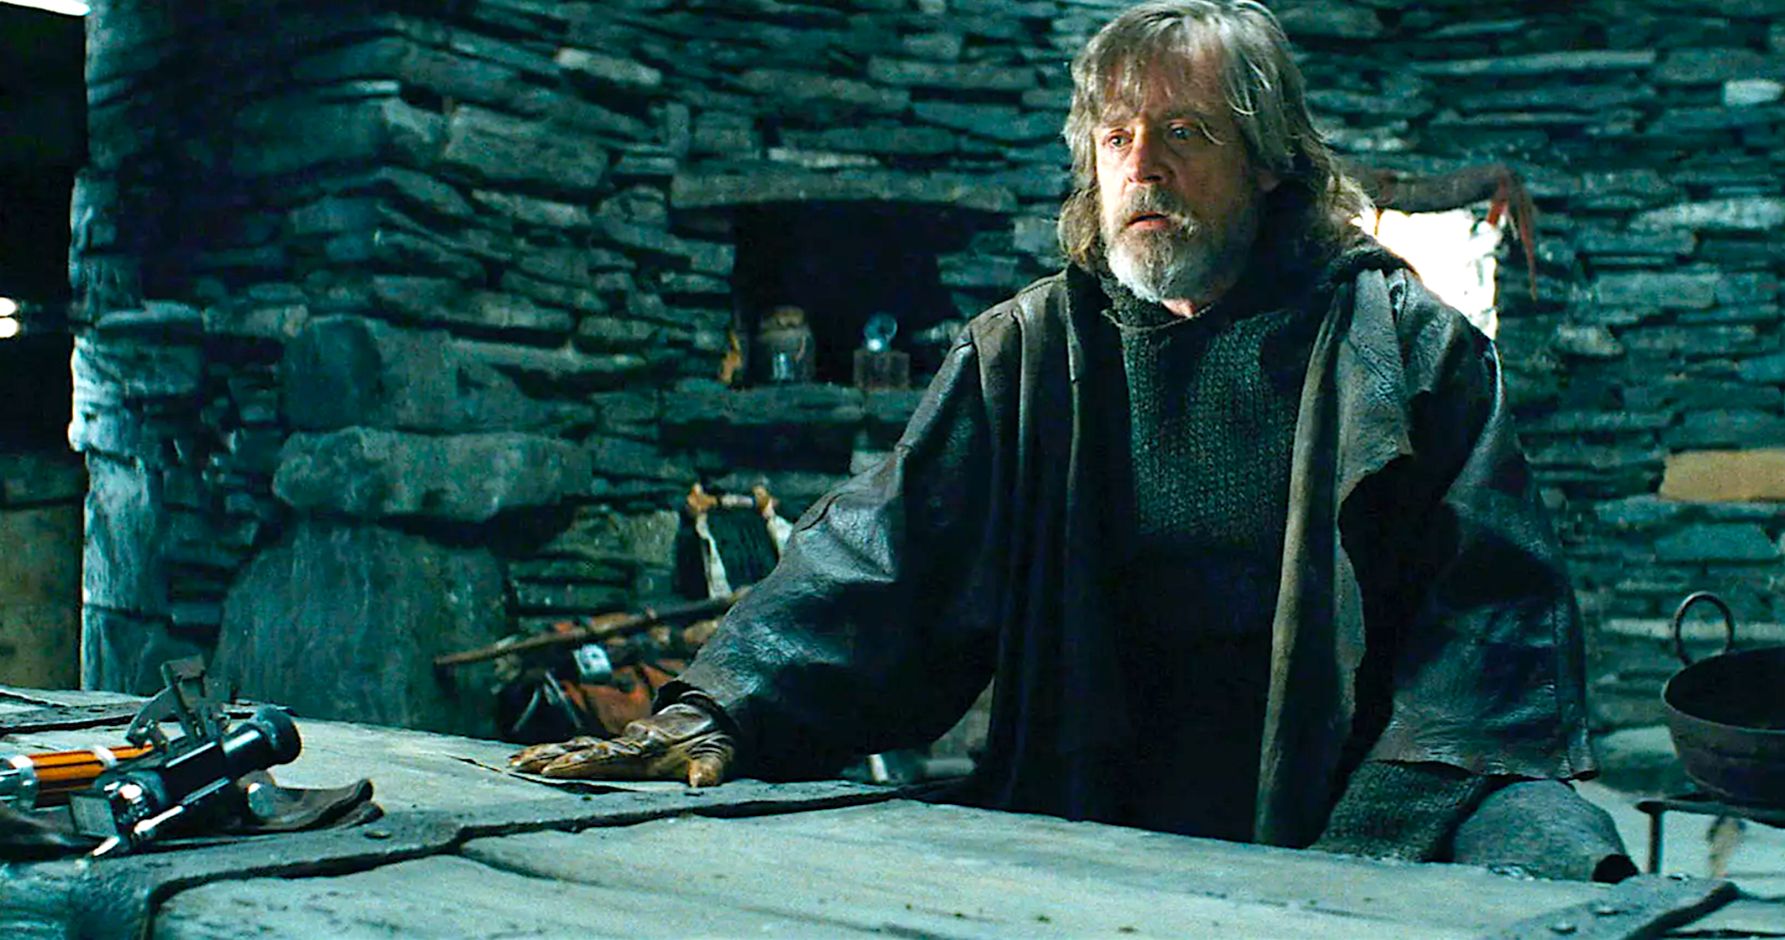 Mark Hamill Confirms Rise of Skywalker Suspicions About Luke's Return